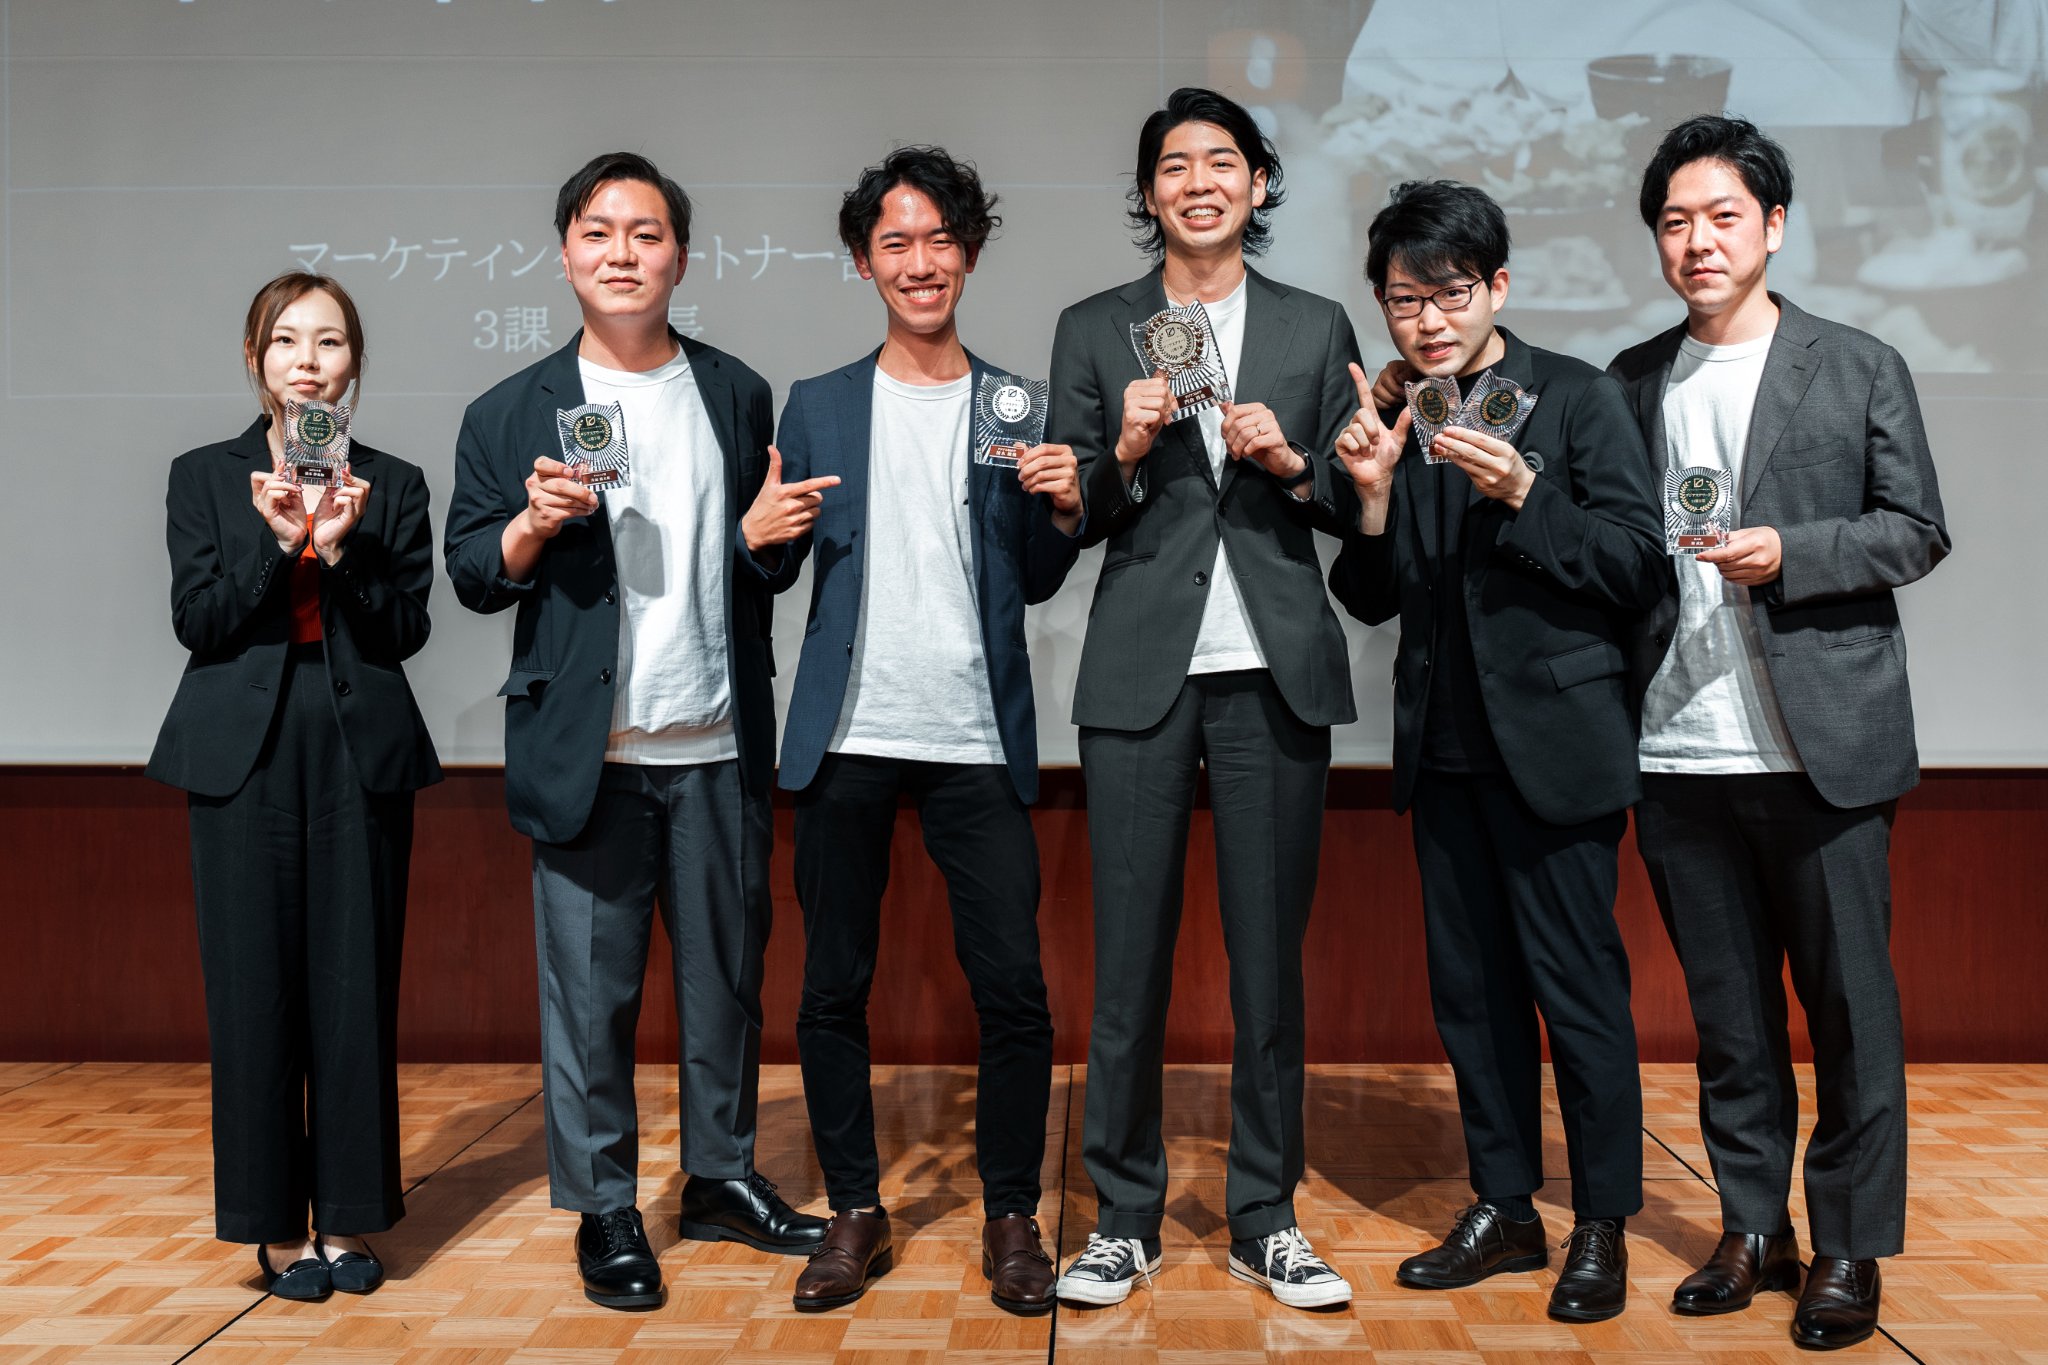 「Web集客日本一の会社」を目指す同社。社内には、同社を担う若手メンバーも活躍中だ。